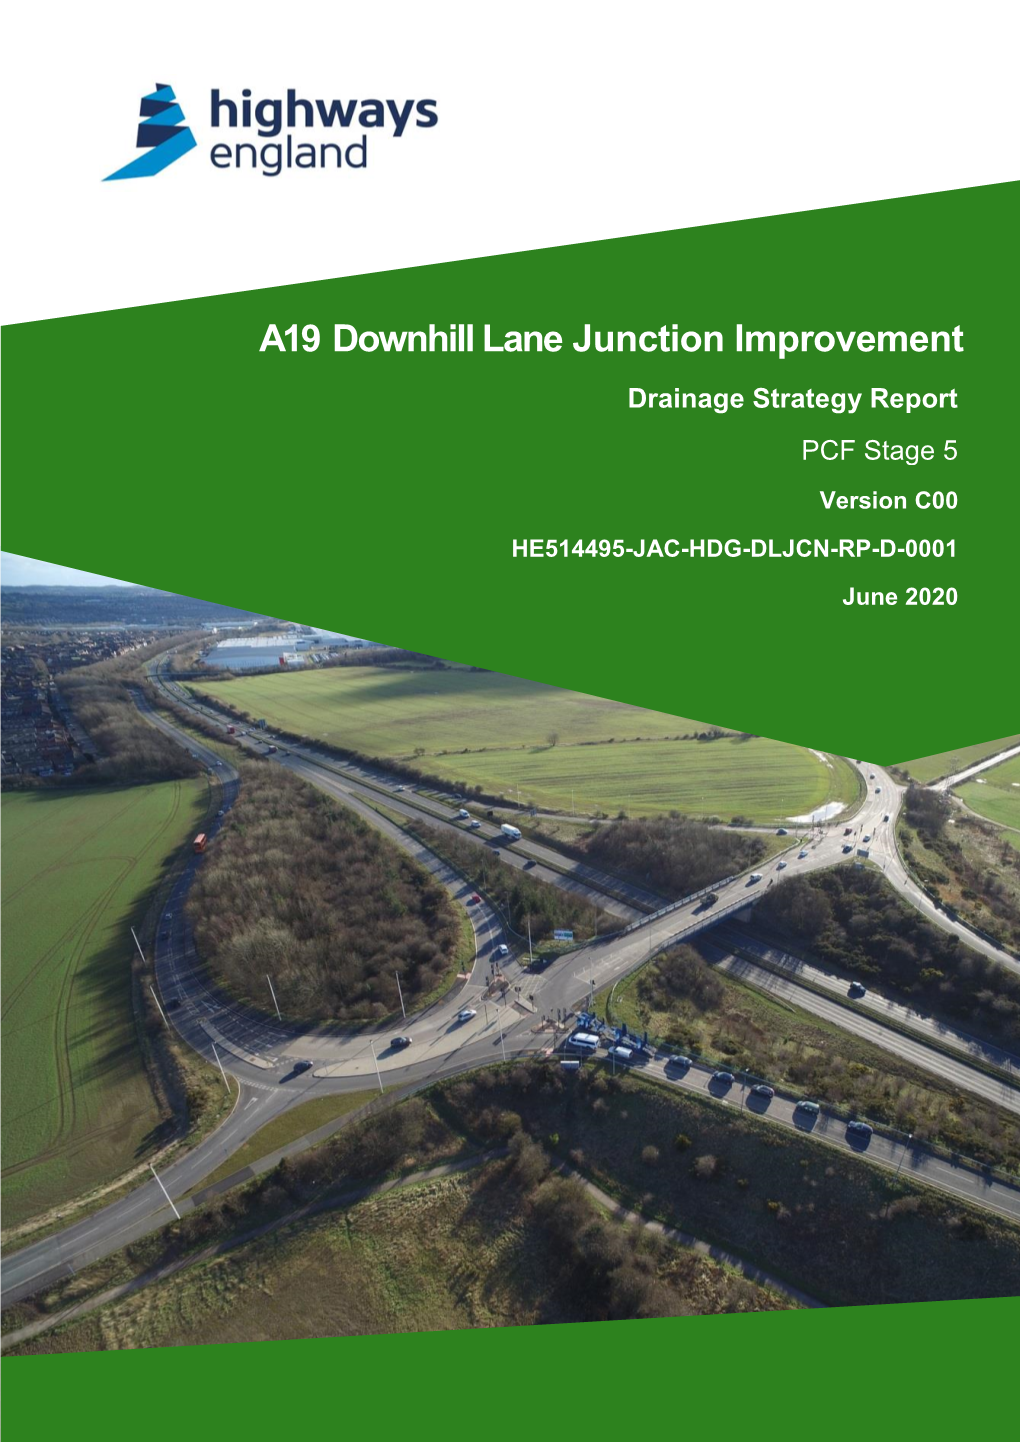 A19 Downhill Lane Drainage Strategy Report